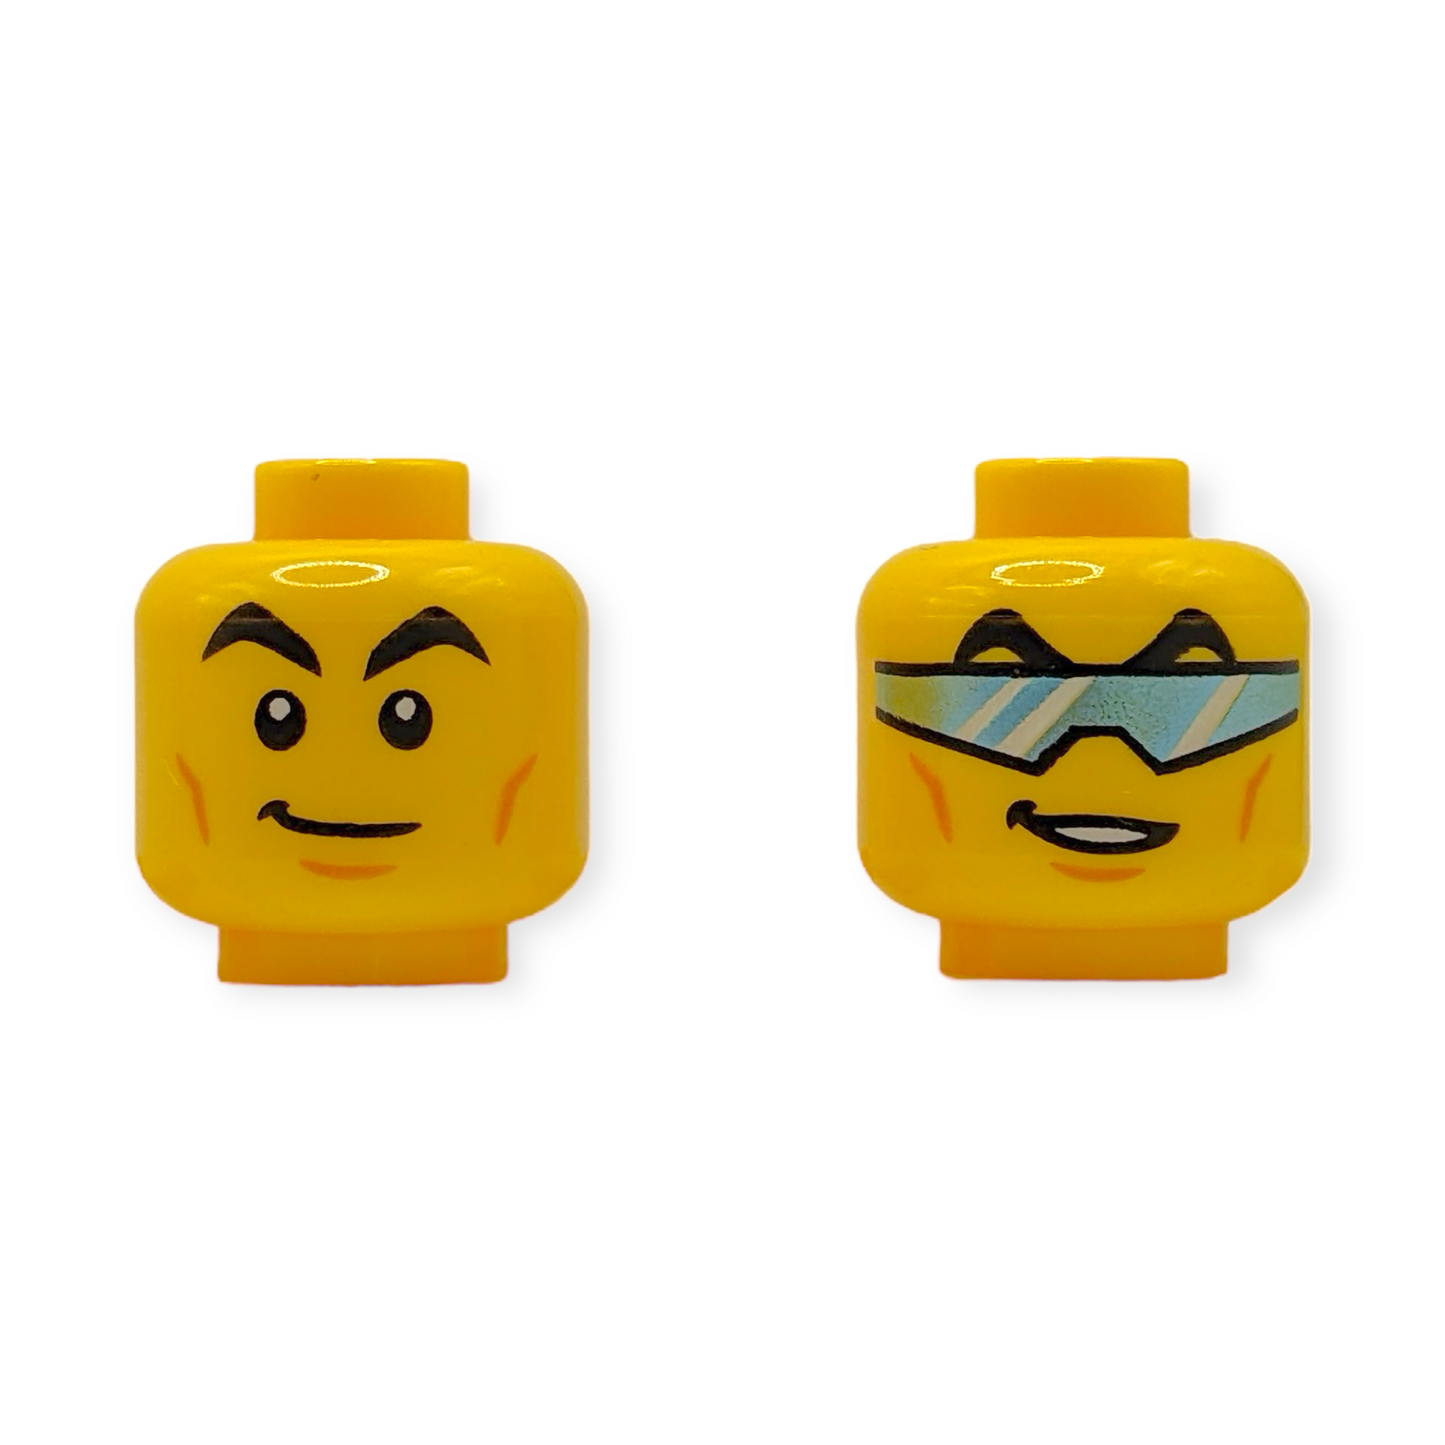 LEGO Head - 3927 Dual Sided Black Arched Eyebrows, Cheek Lines